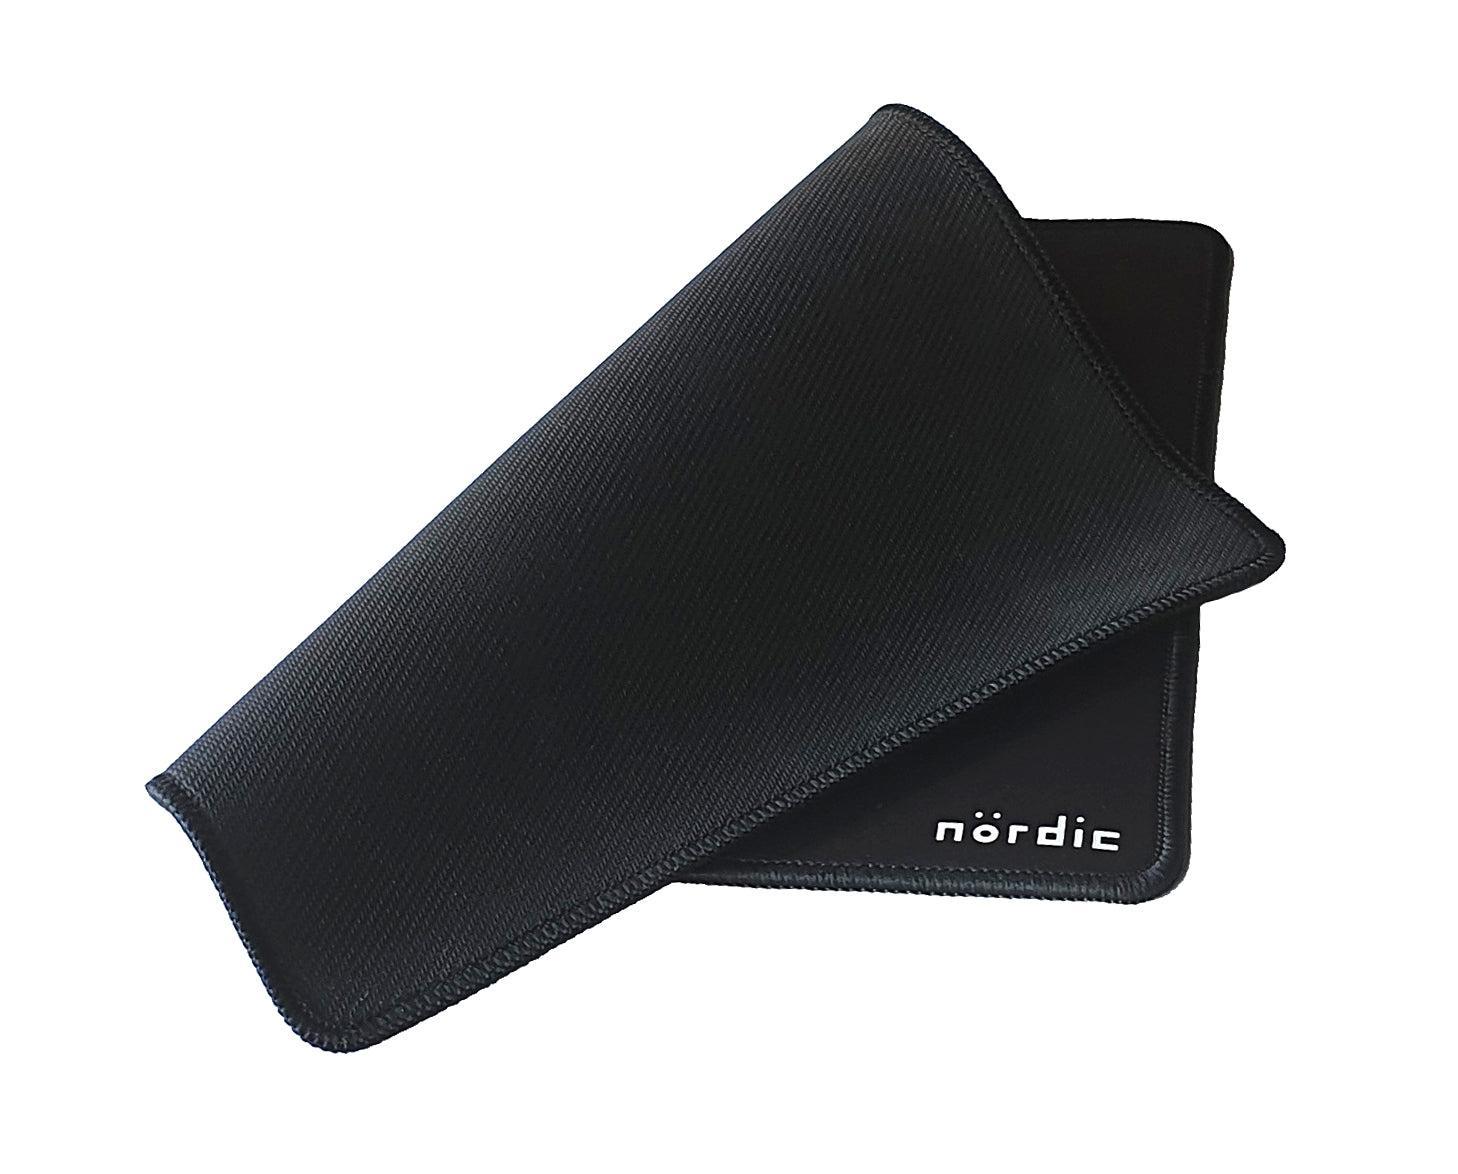 NÖRDIC MousePad, 320x270x3mm, glidefritt naturgummi, elastan Top, sydd kanter, svart